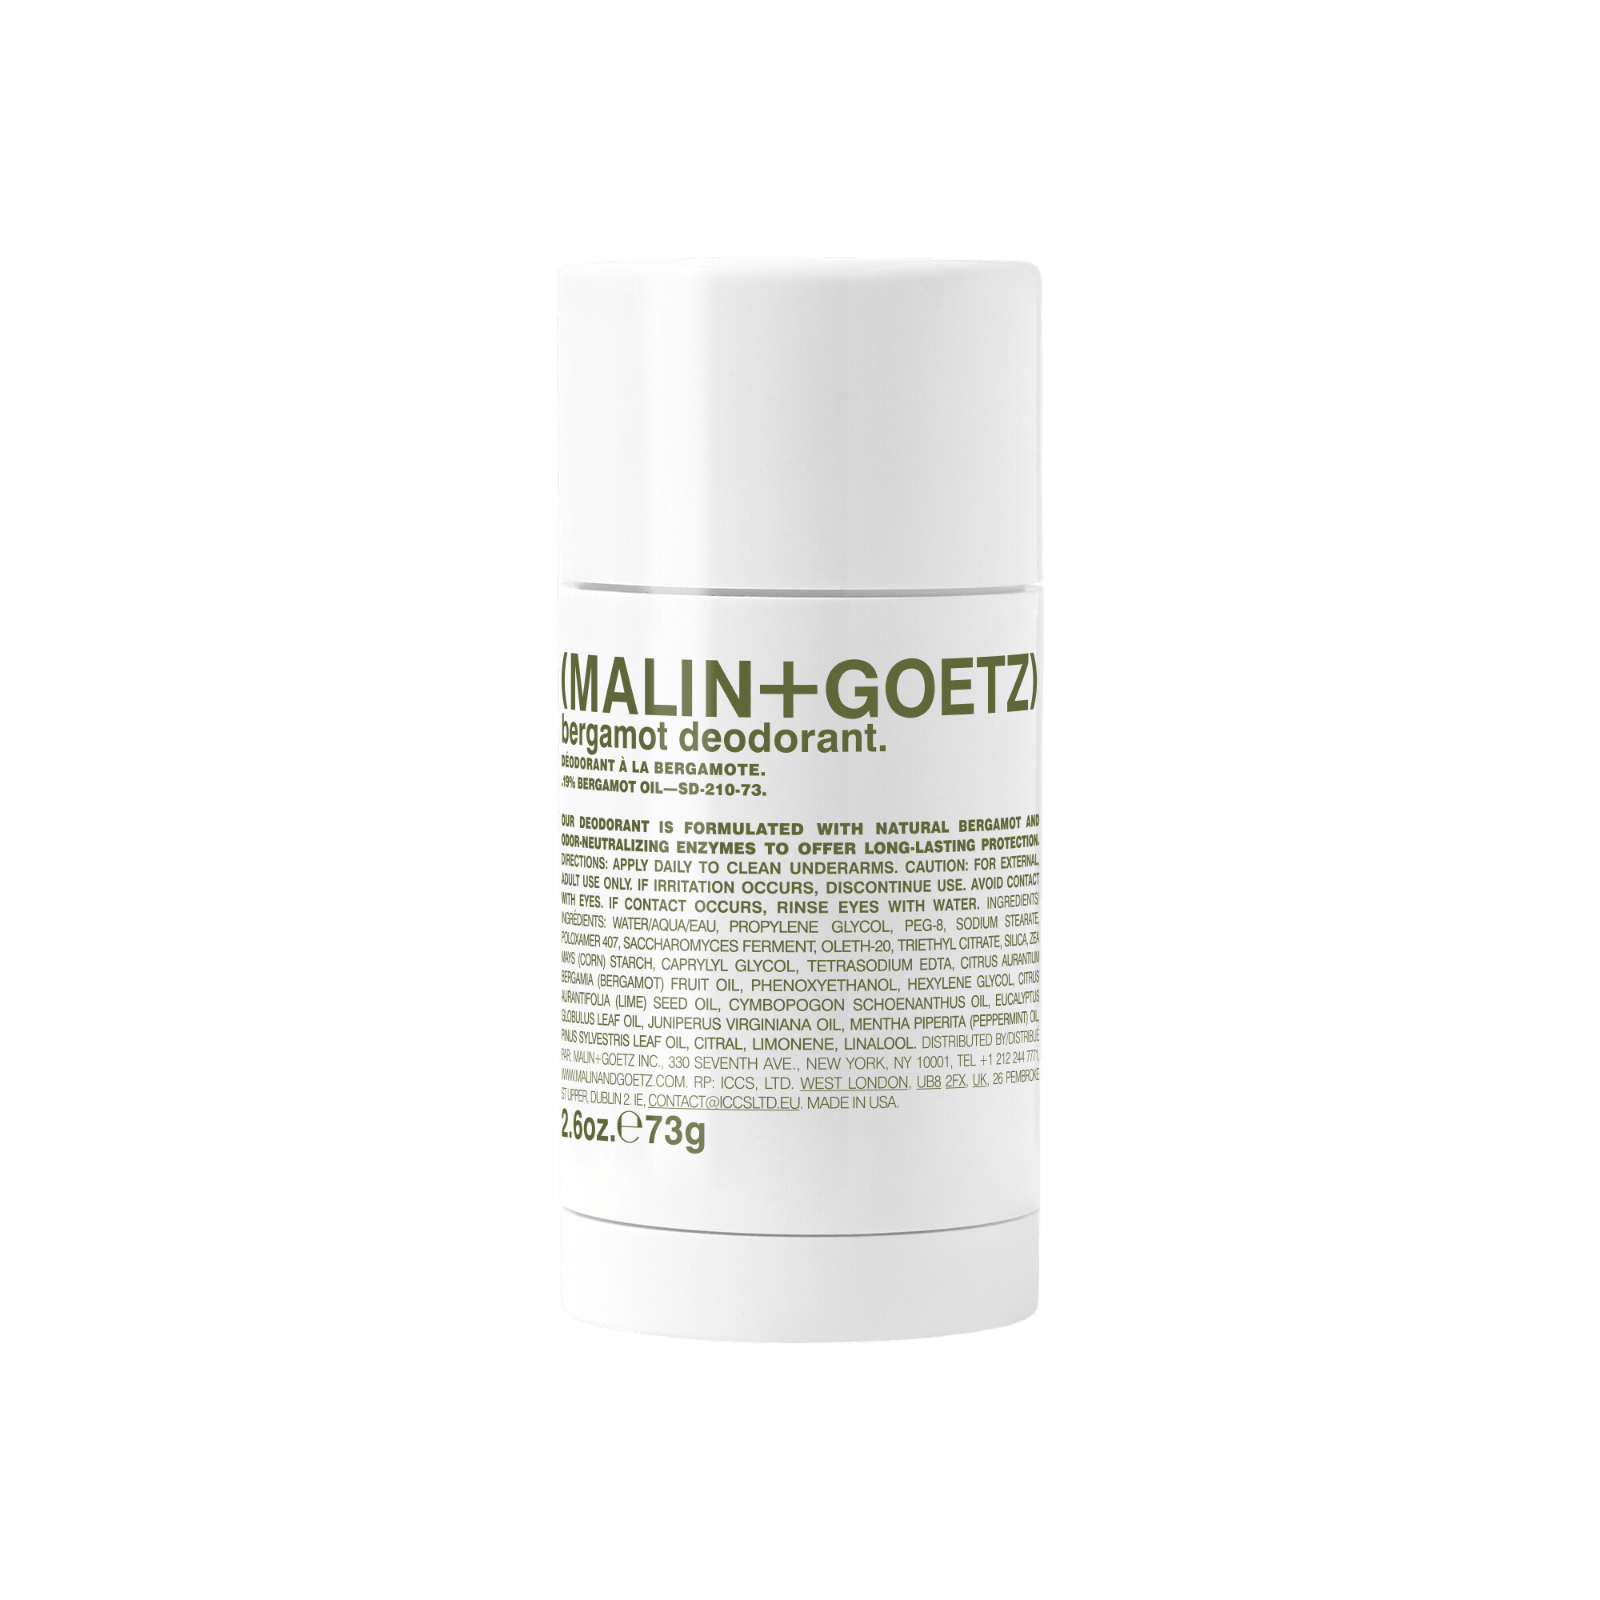 Malin + Goetz - Bergamot deodorant | Perfume Lounge